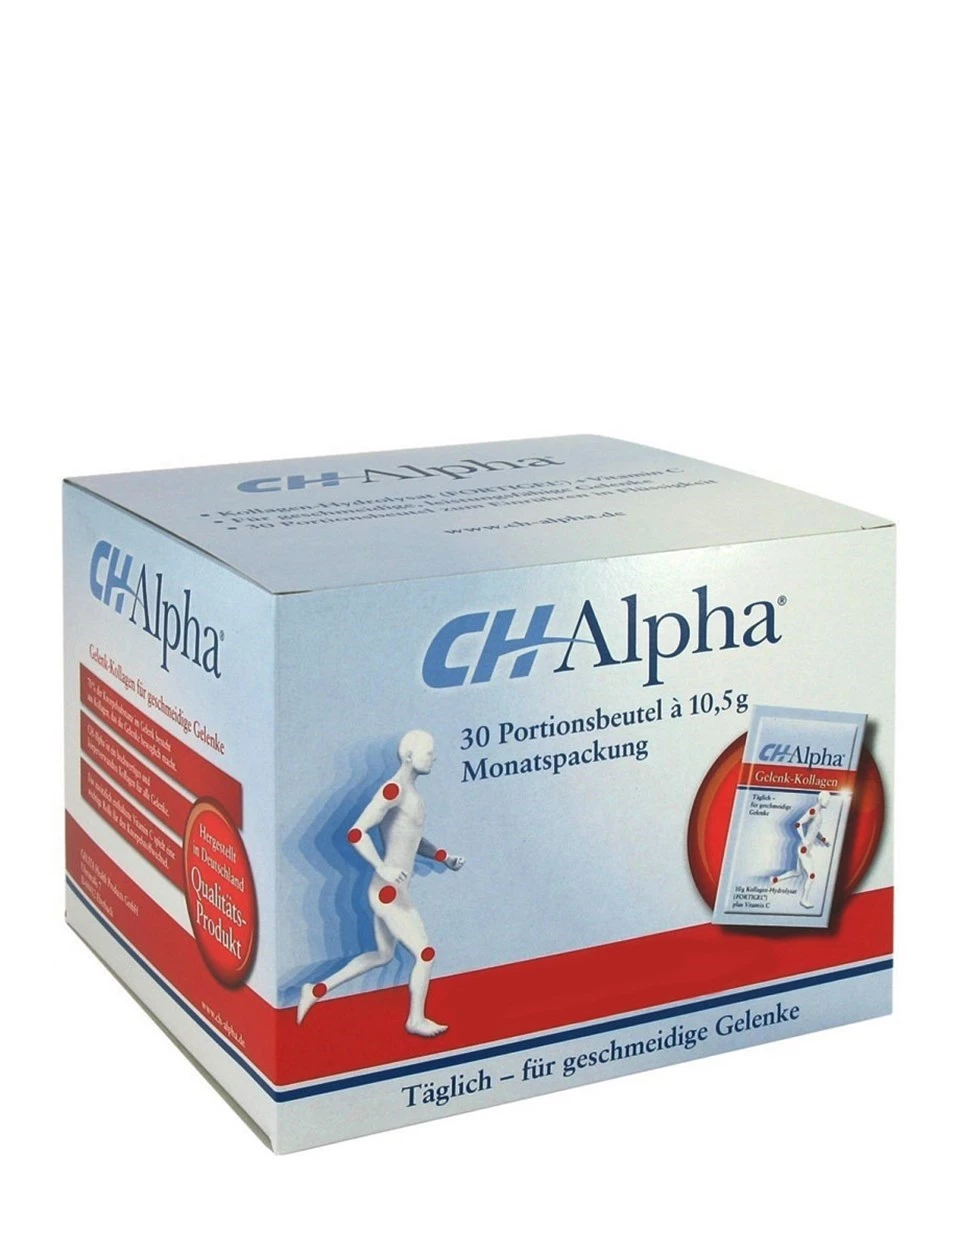 CH Alpha Plus 30 Saşe